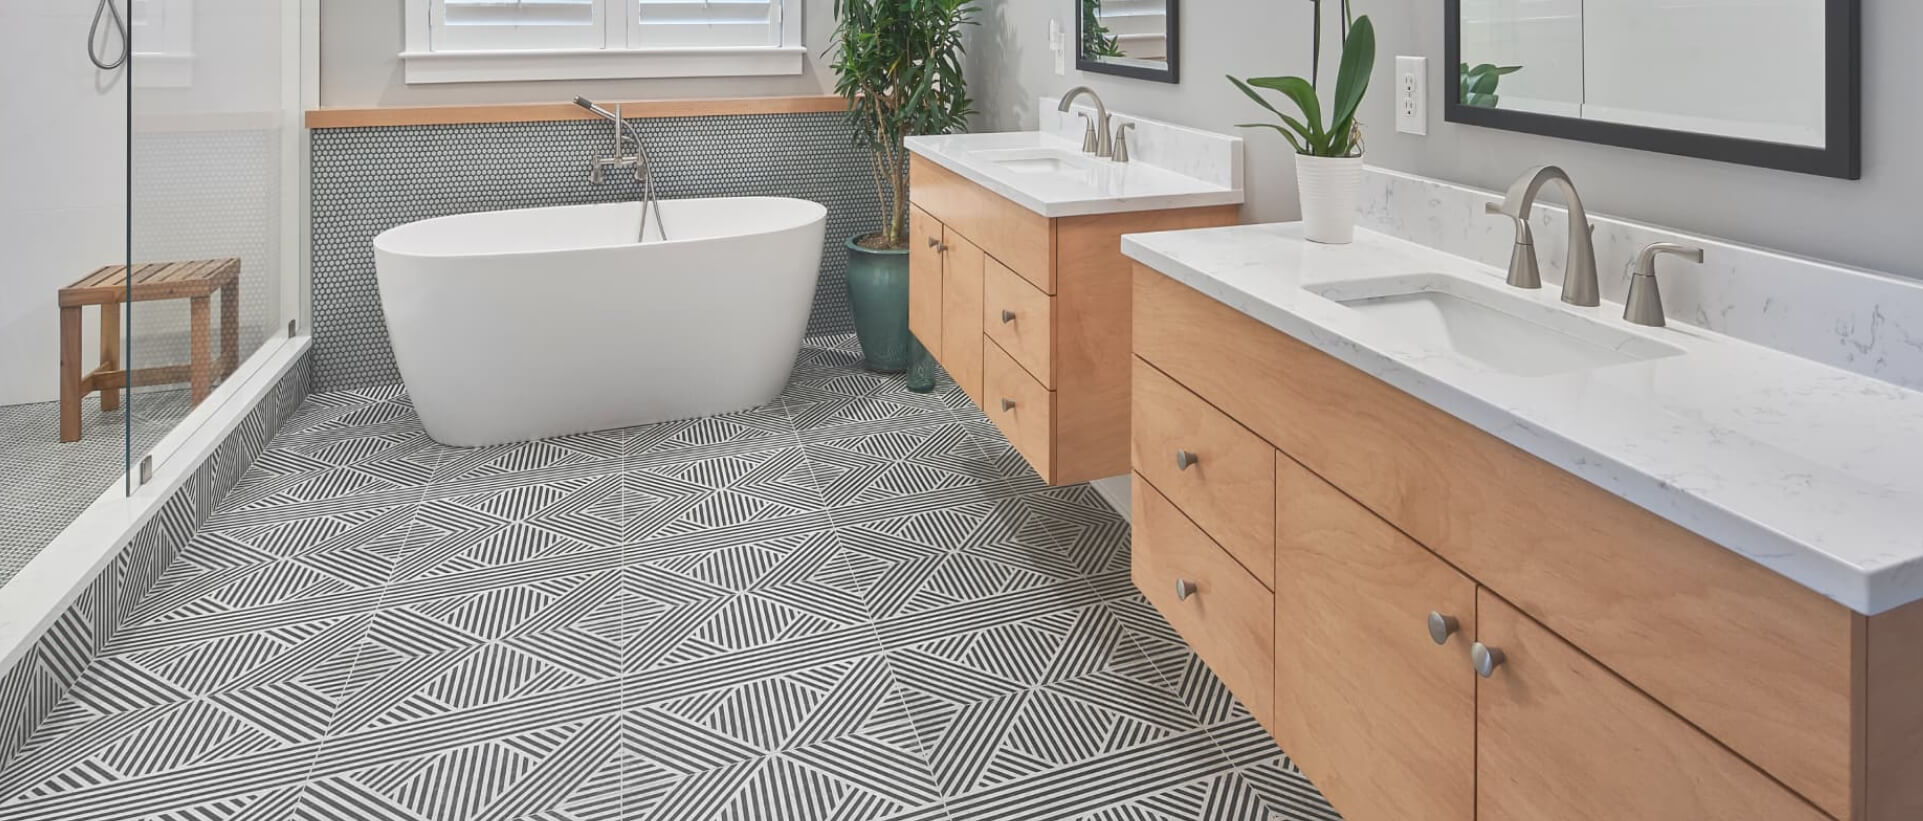 bathroom renovation double floating vanities freestanding garden tub on tribal pattern tile floor
